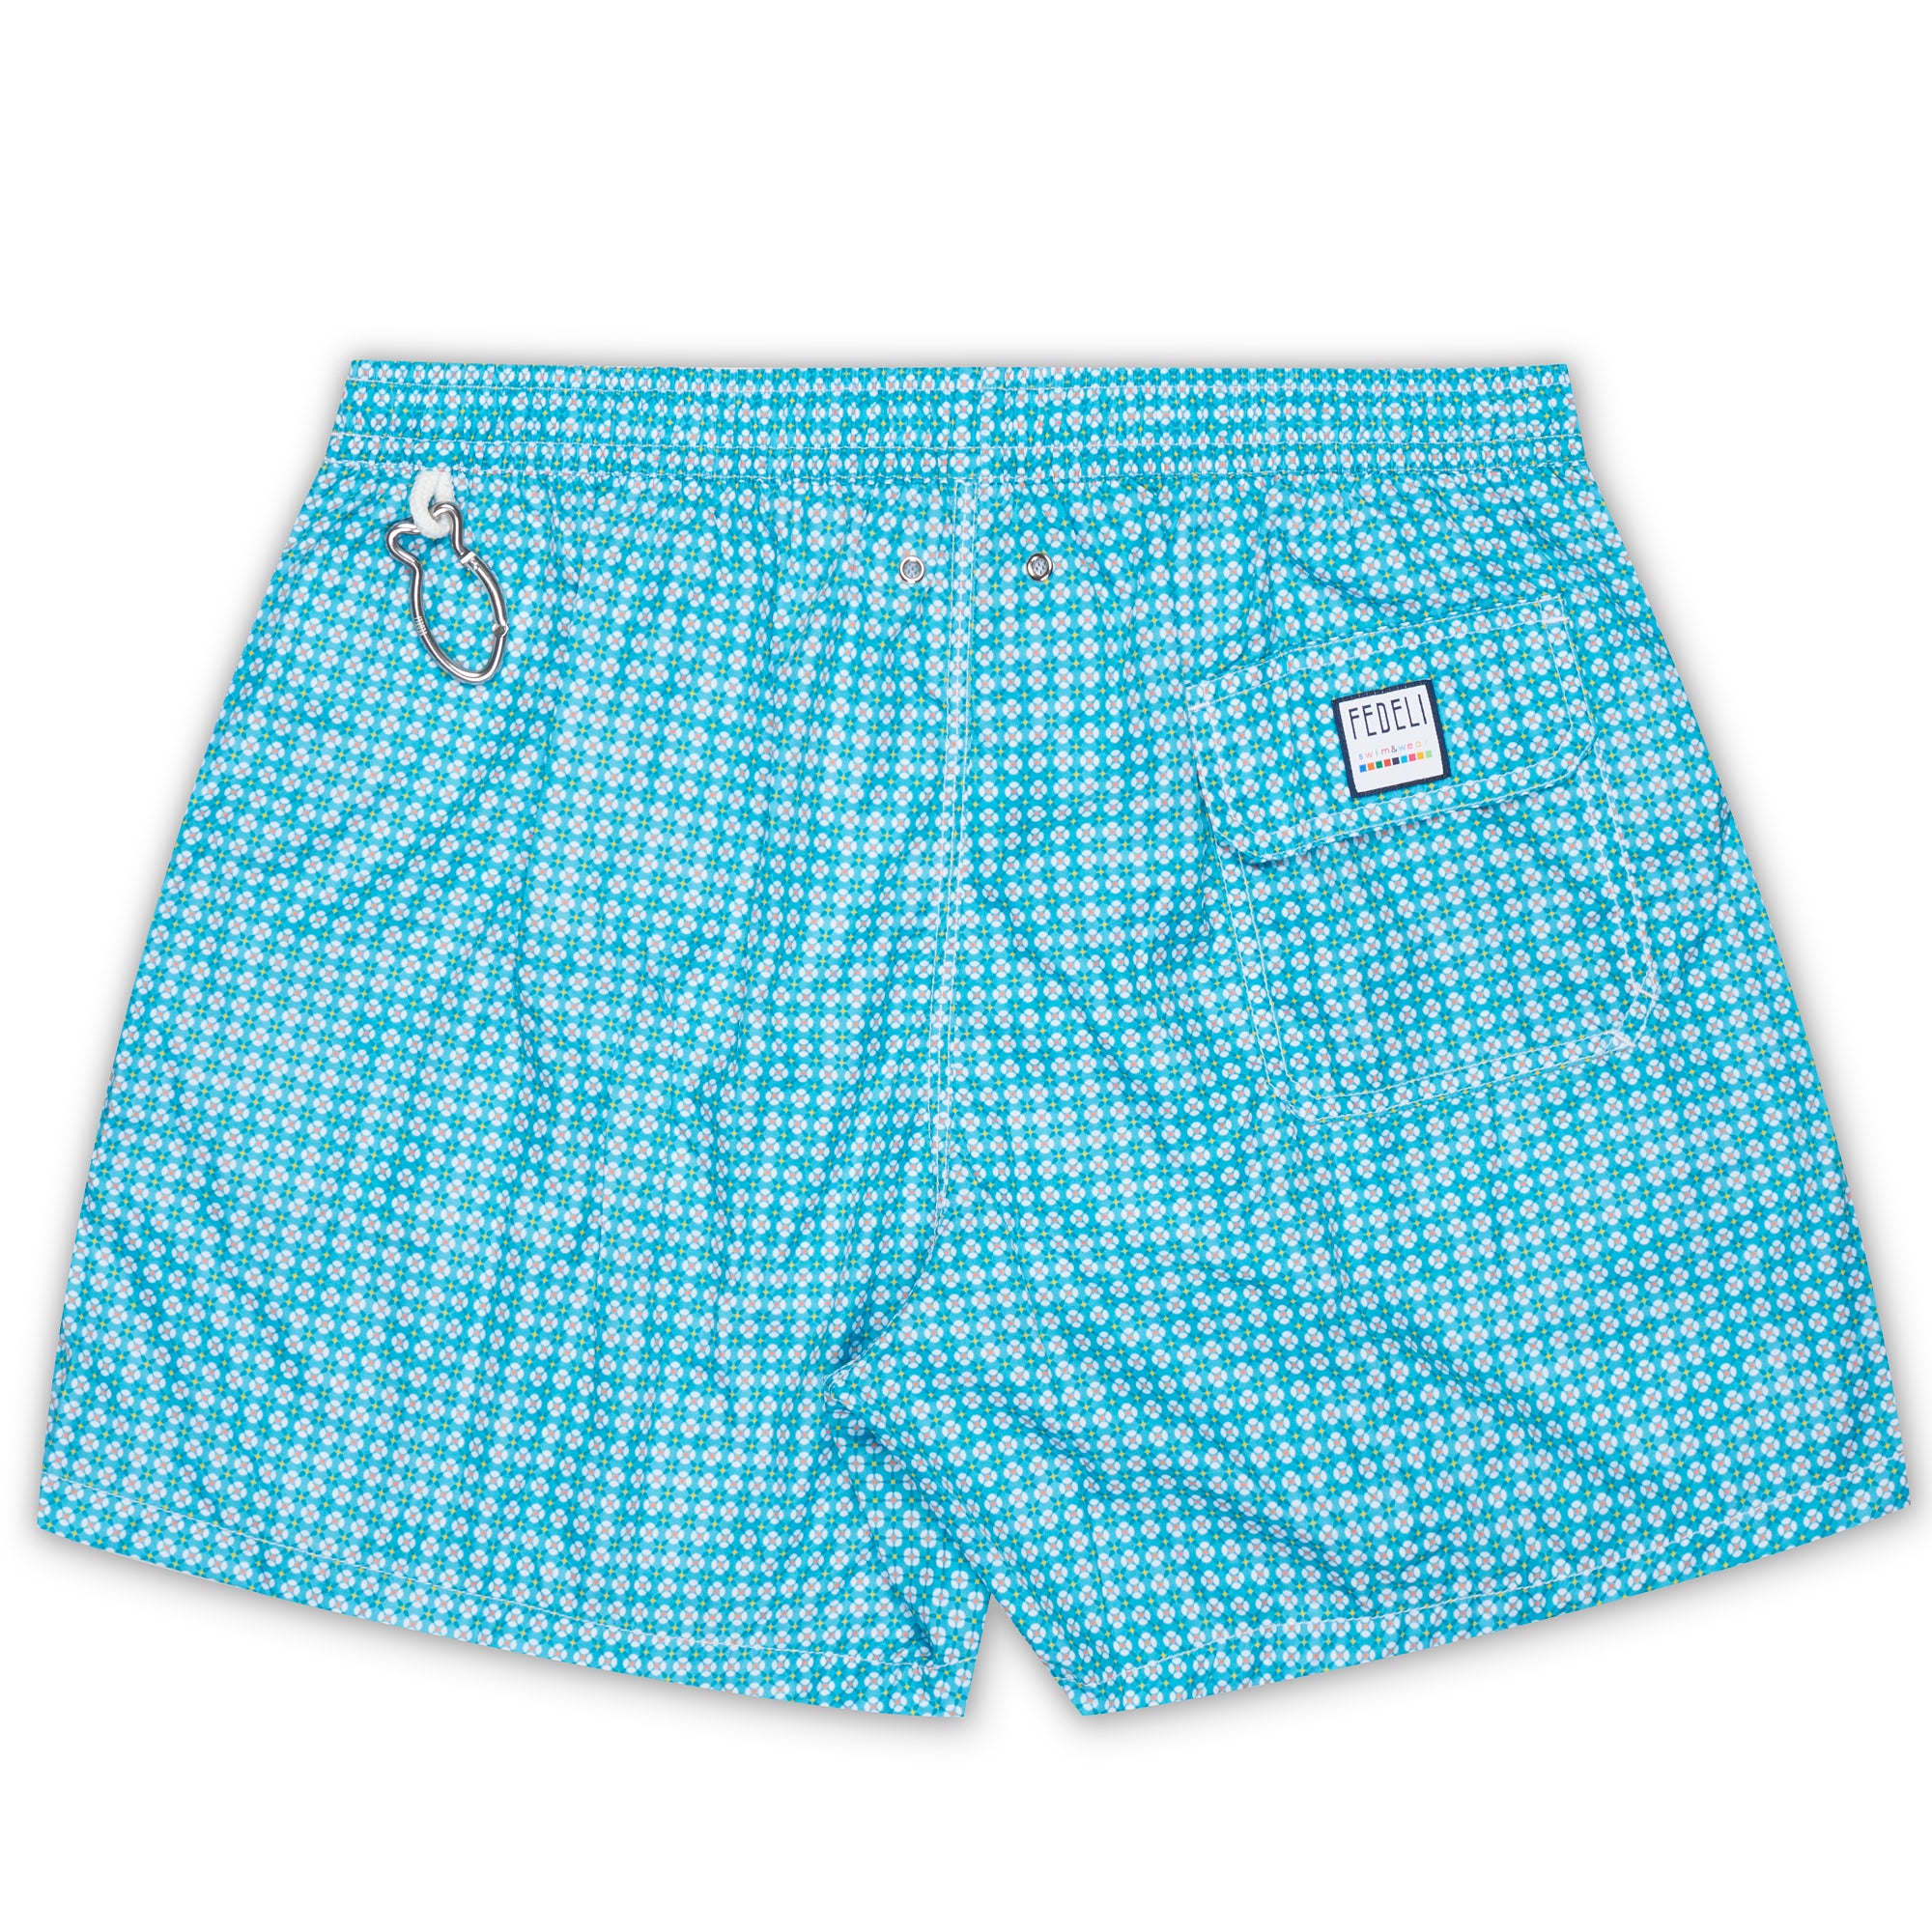 FEDELI Teal Blue Geometric Printed Madeira Airstop Swim Shorts Trunks NEW 2XL